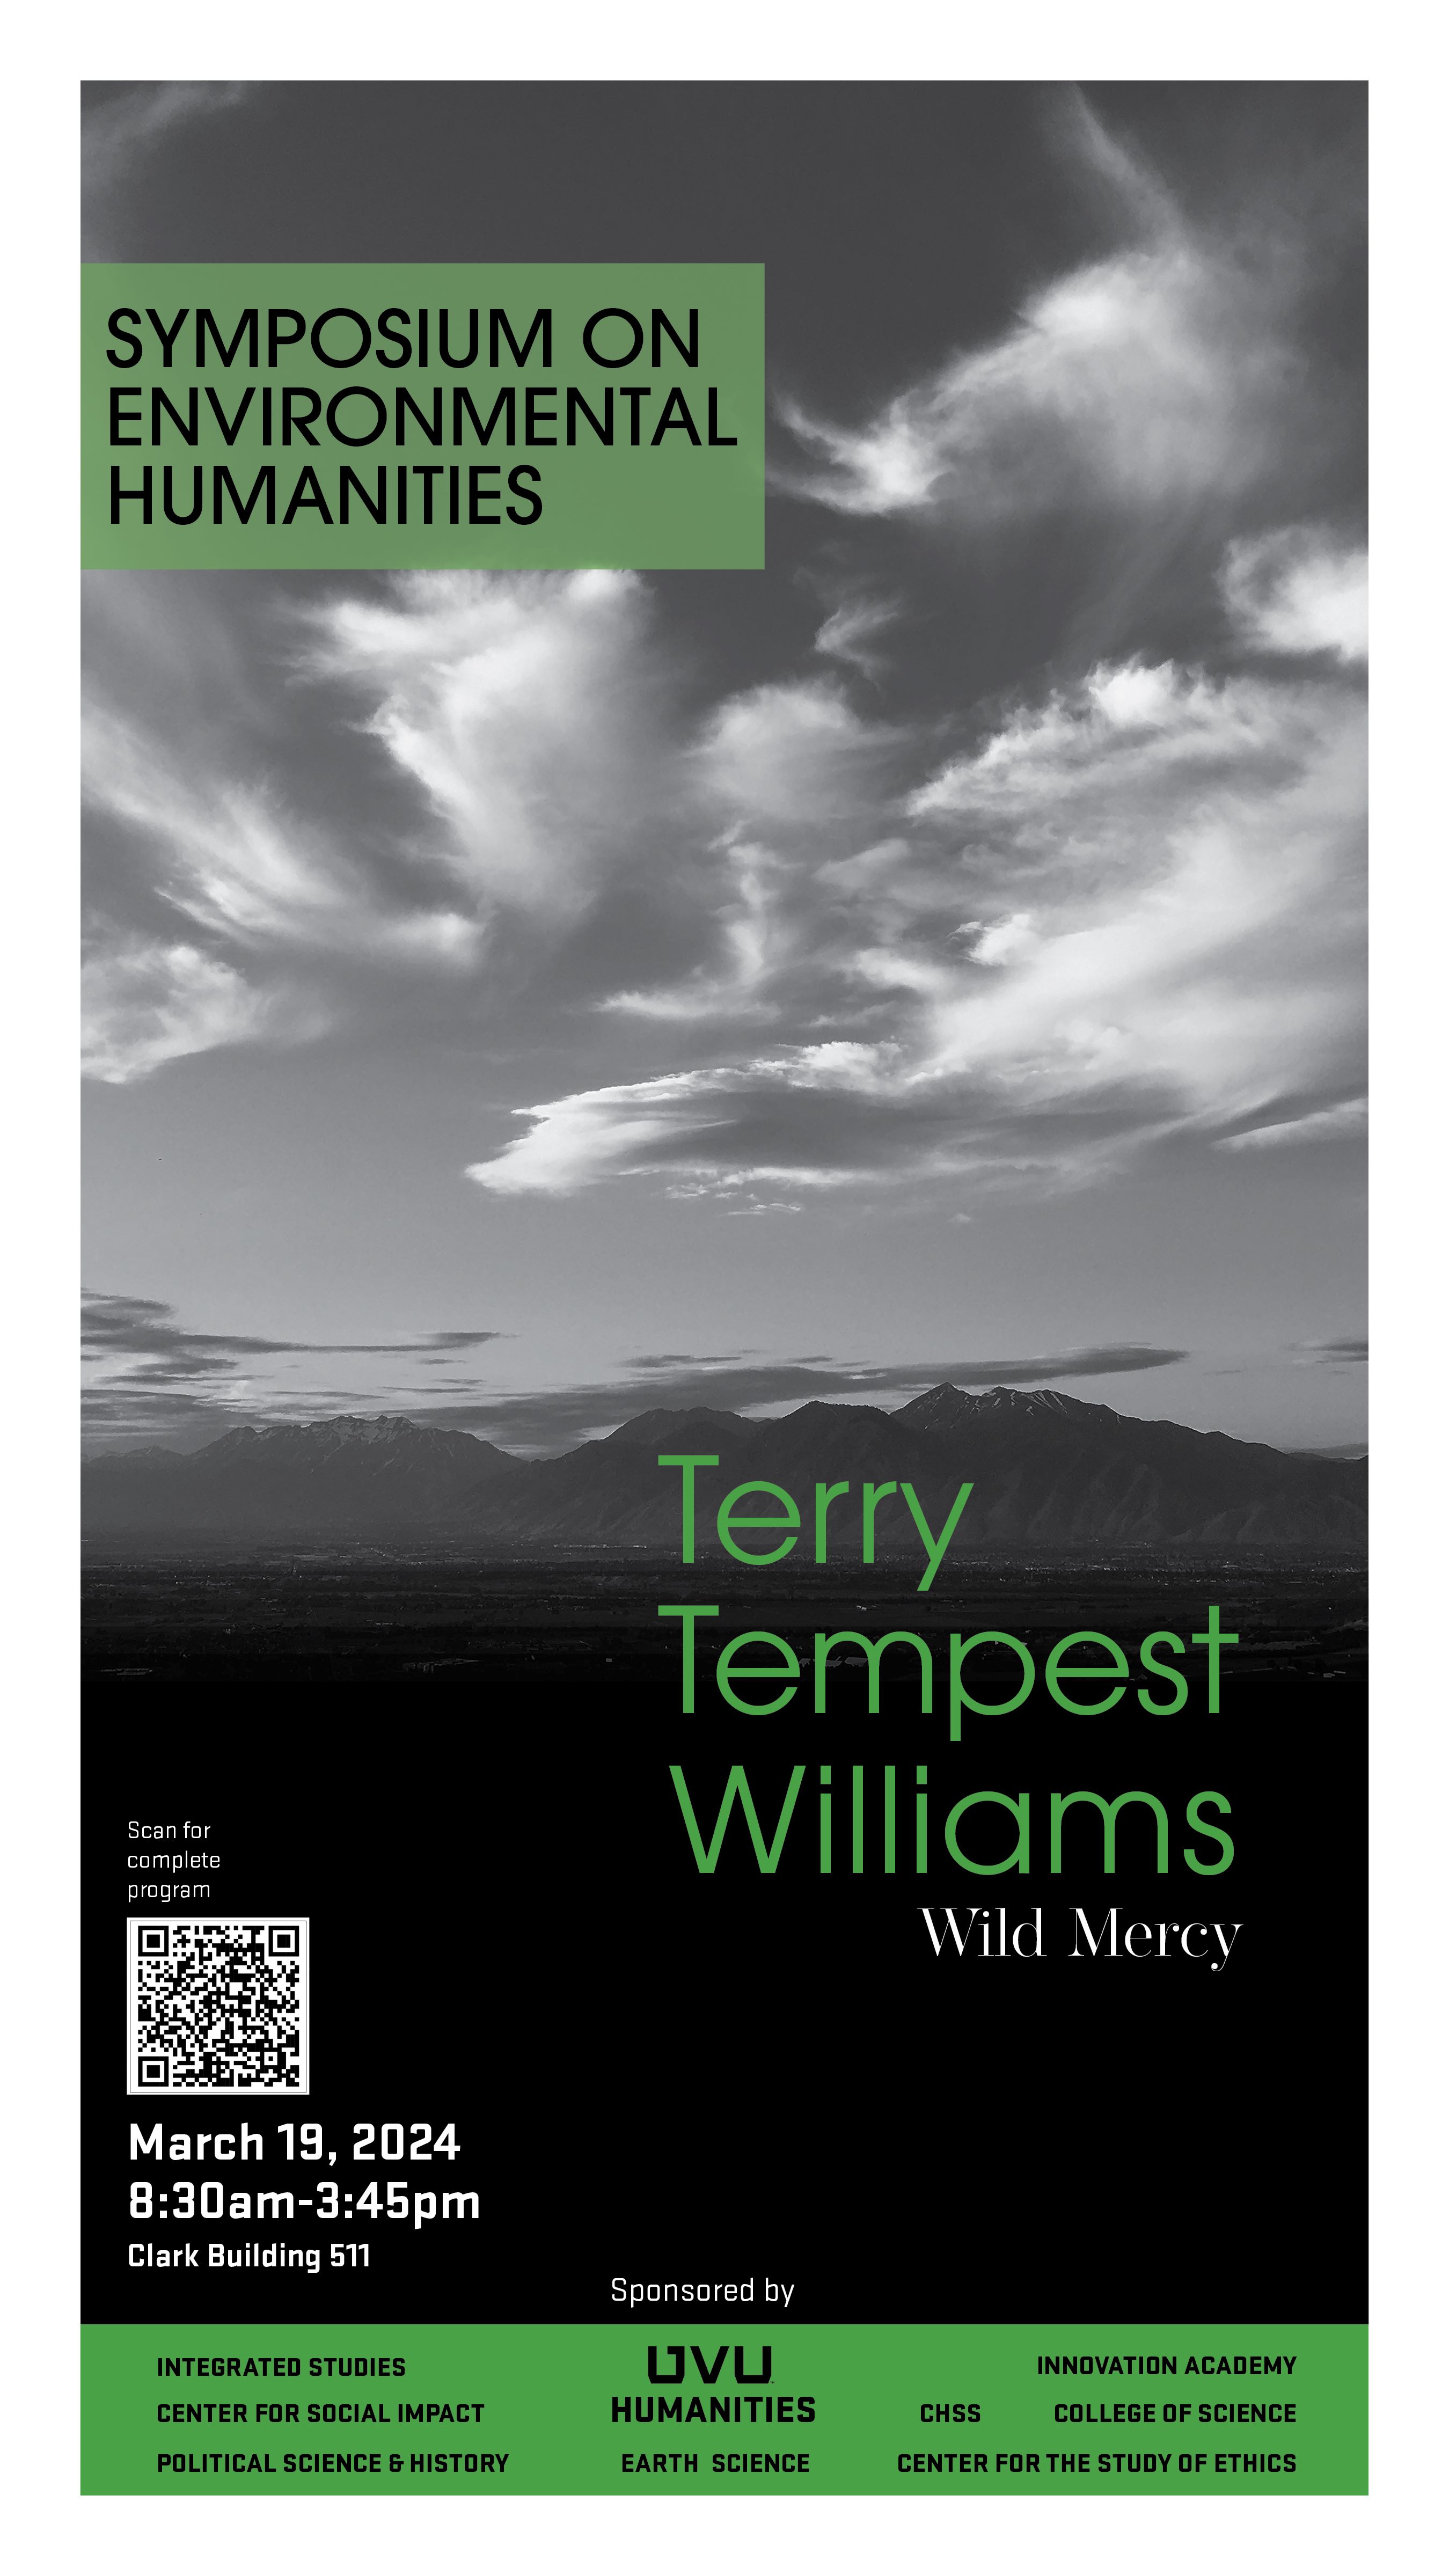 Sympsoium on environmental humanities - Terry Tempest Williams Wild Mercy